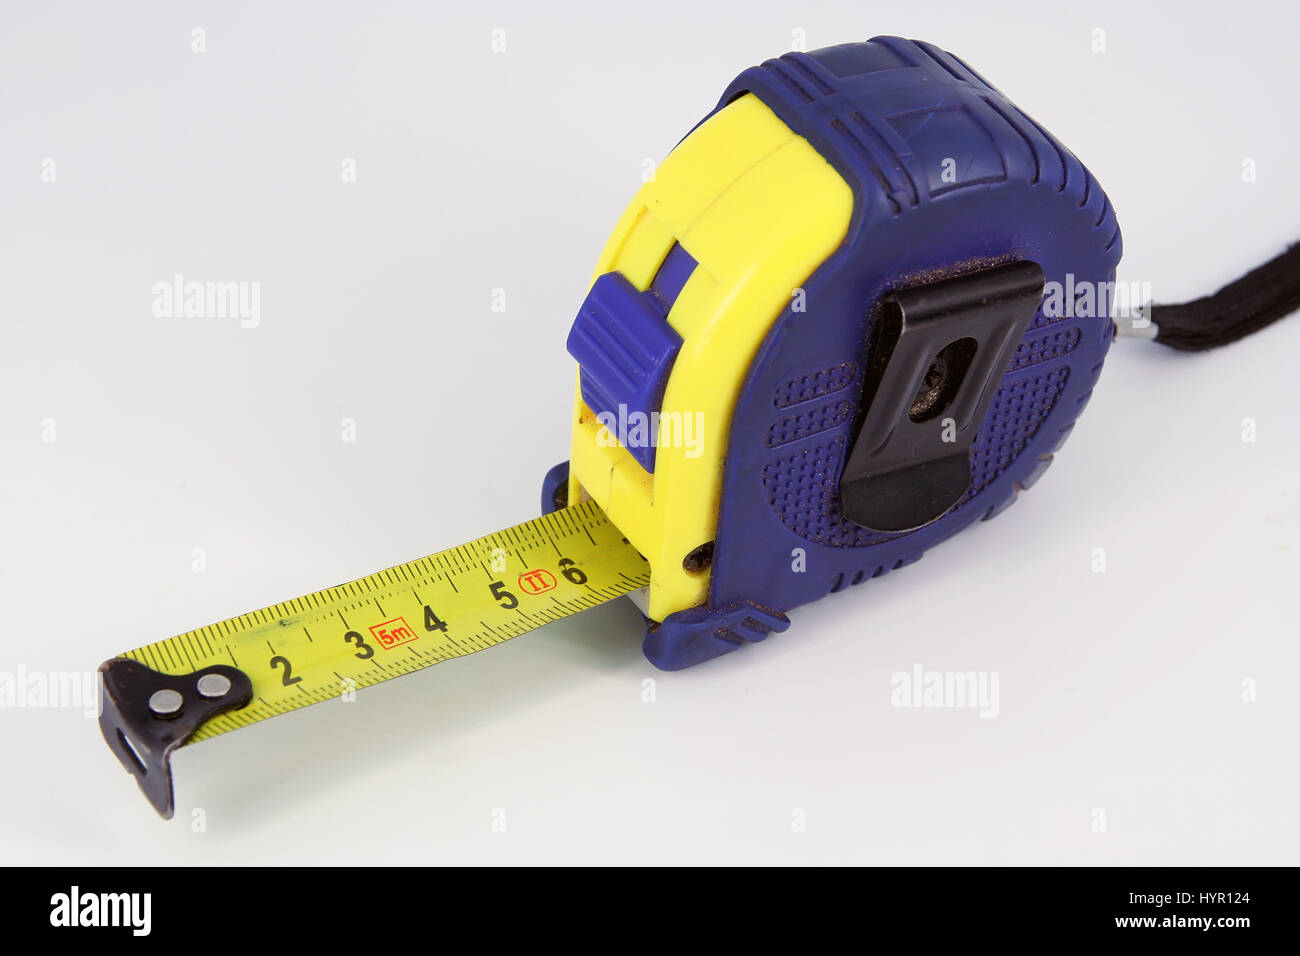 https://c8.alamy.com/comp/HYR124/construction-meter-measuring-tool-tape-measure-tape-meter-HYR124.jpg